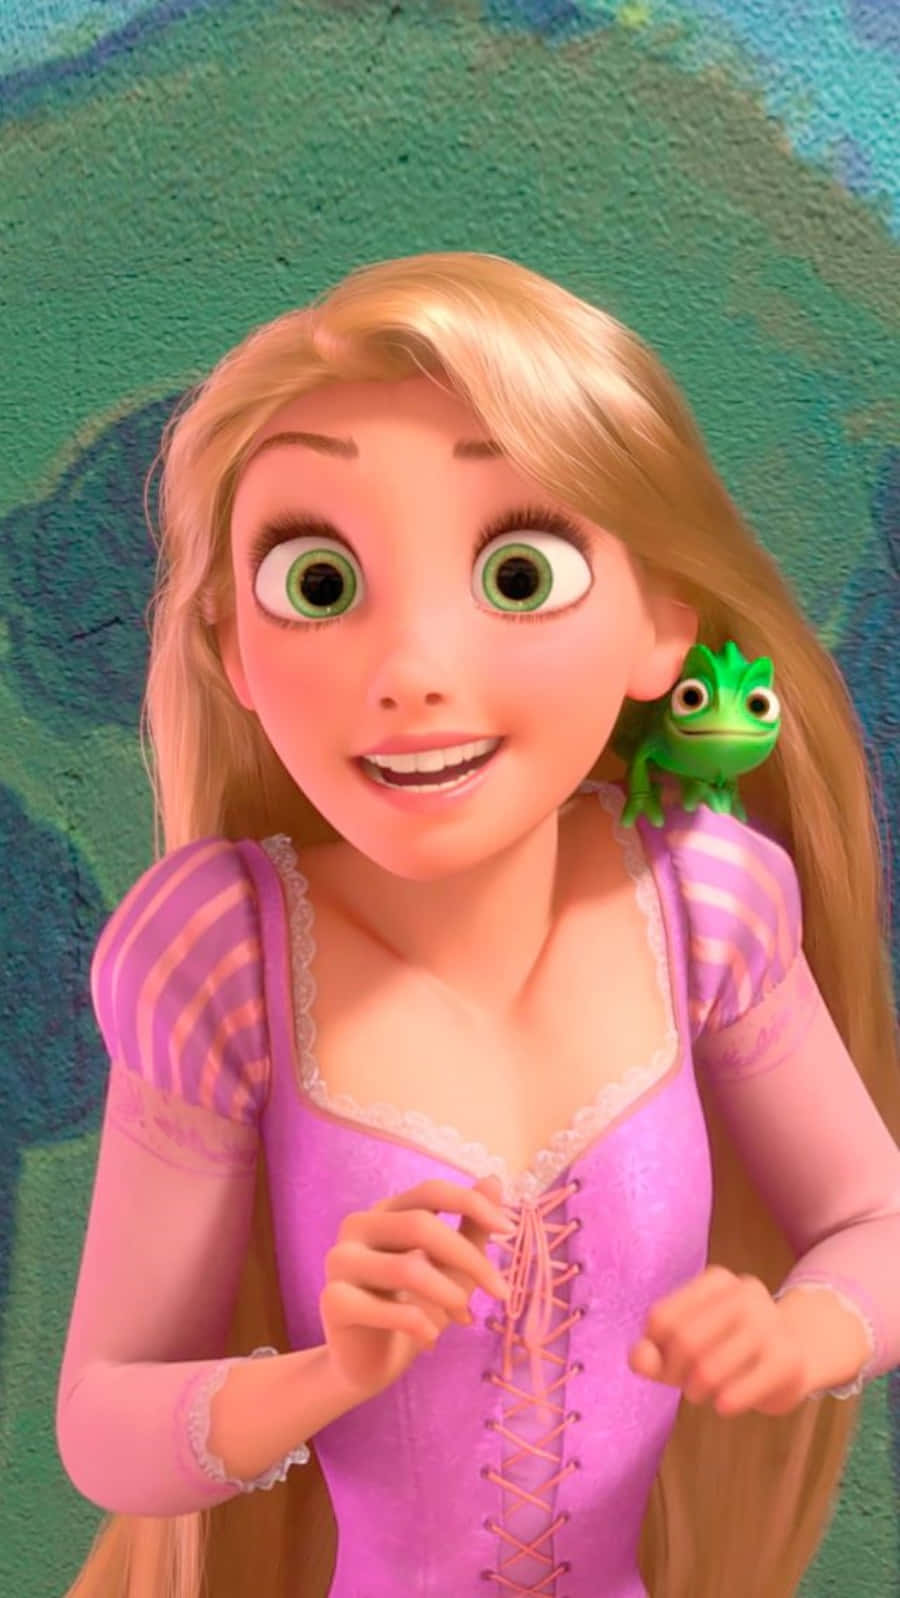 Asempre Positiva Rapunzel Vivendo Seu Sonho De Explorar O Mundo